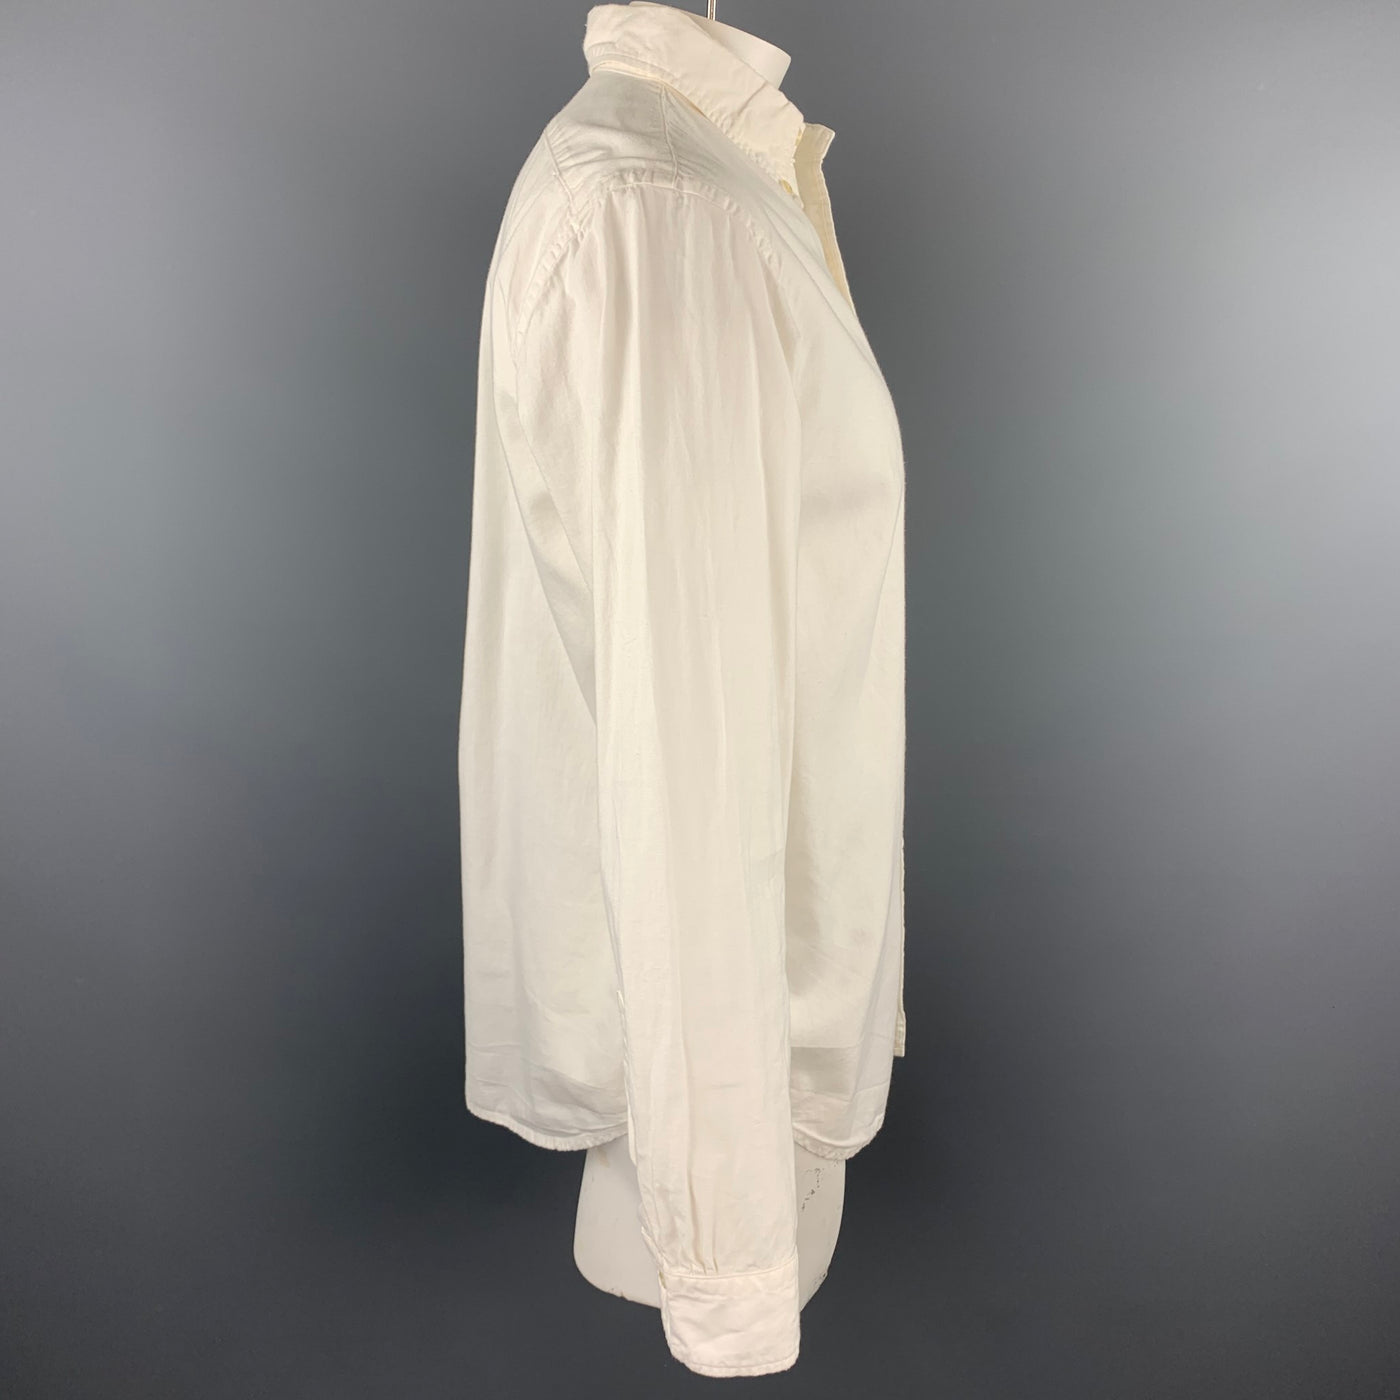 ORSLOW Size L White Cotton Button Down Long Sleeve Shirt